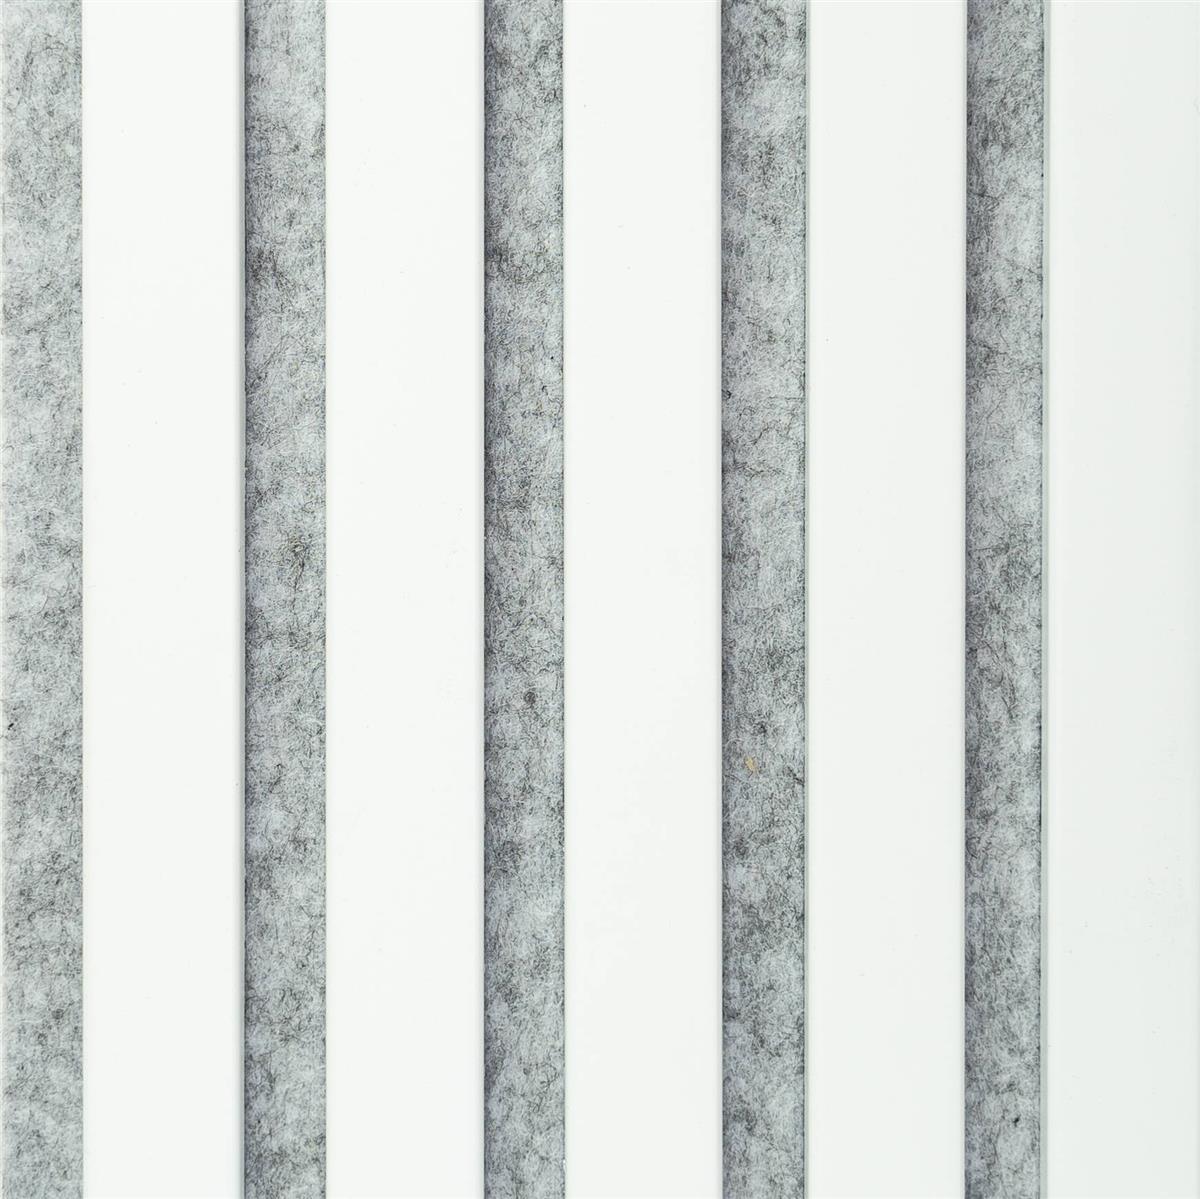 JOKA Paro Akustik Wandpaneele PAG220 279 cm Weiß lackiert 9016 ähnlich, graues Vlies